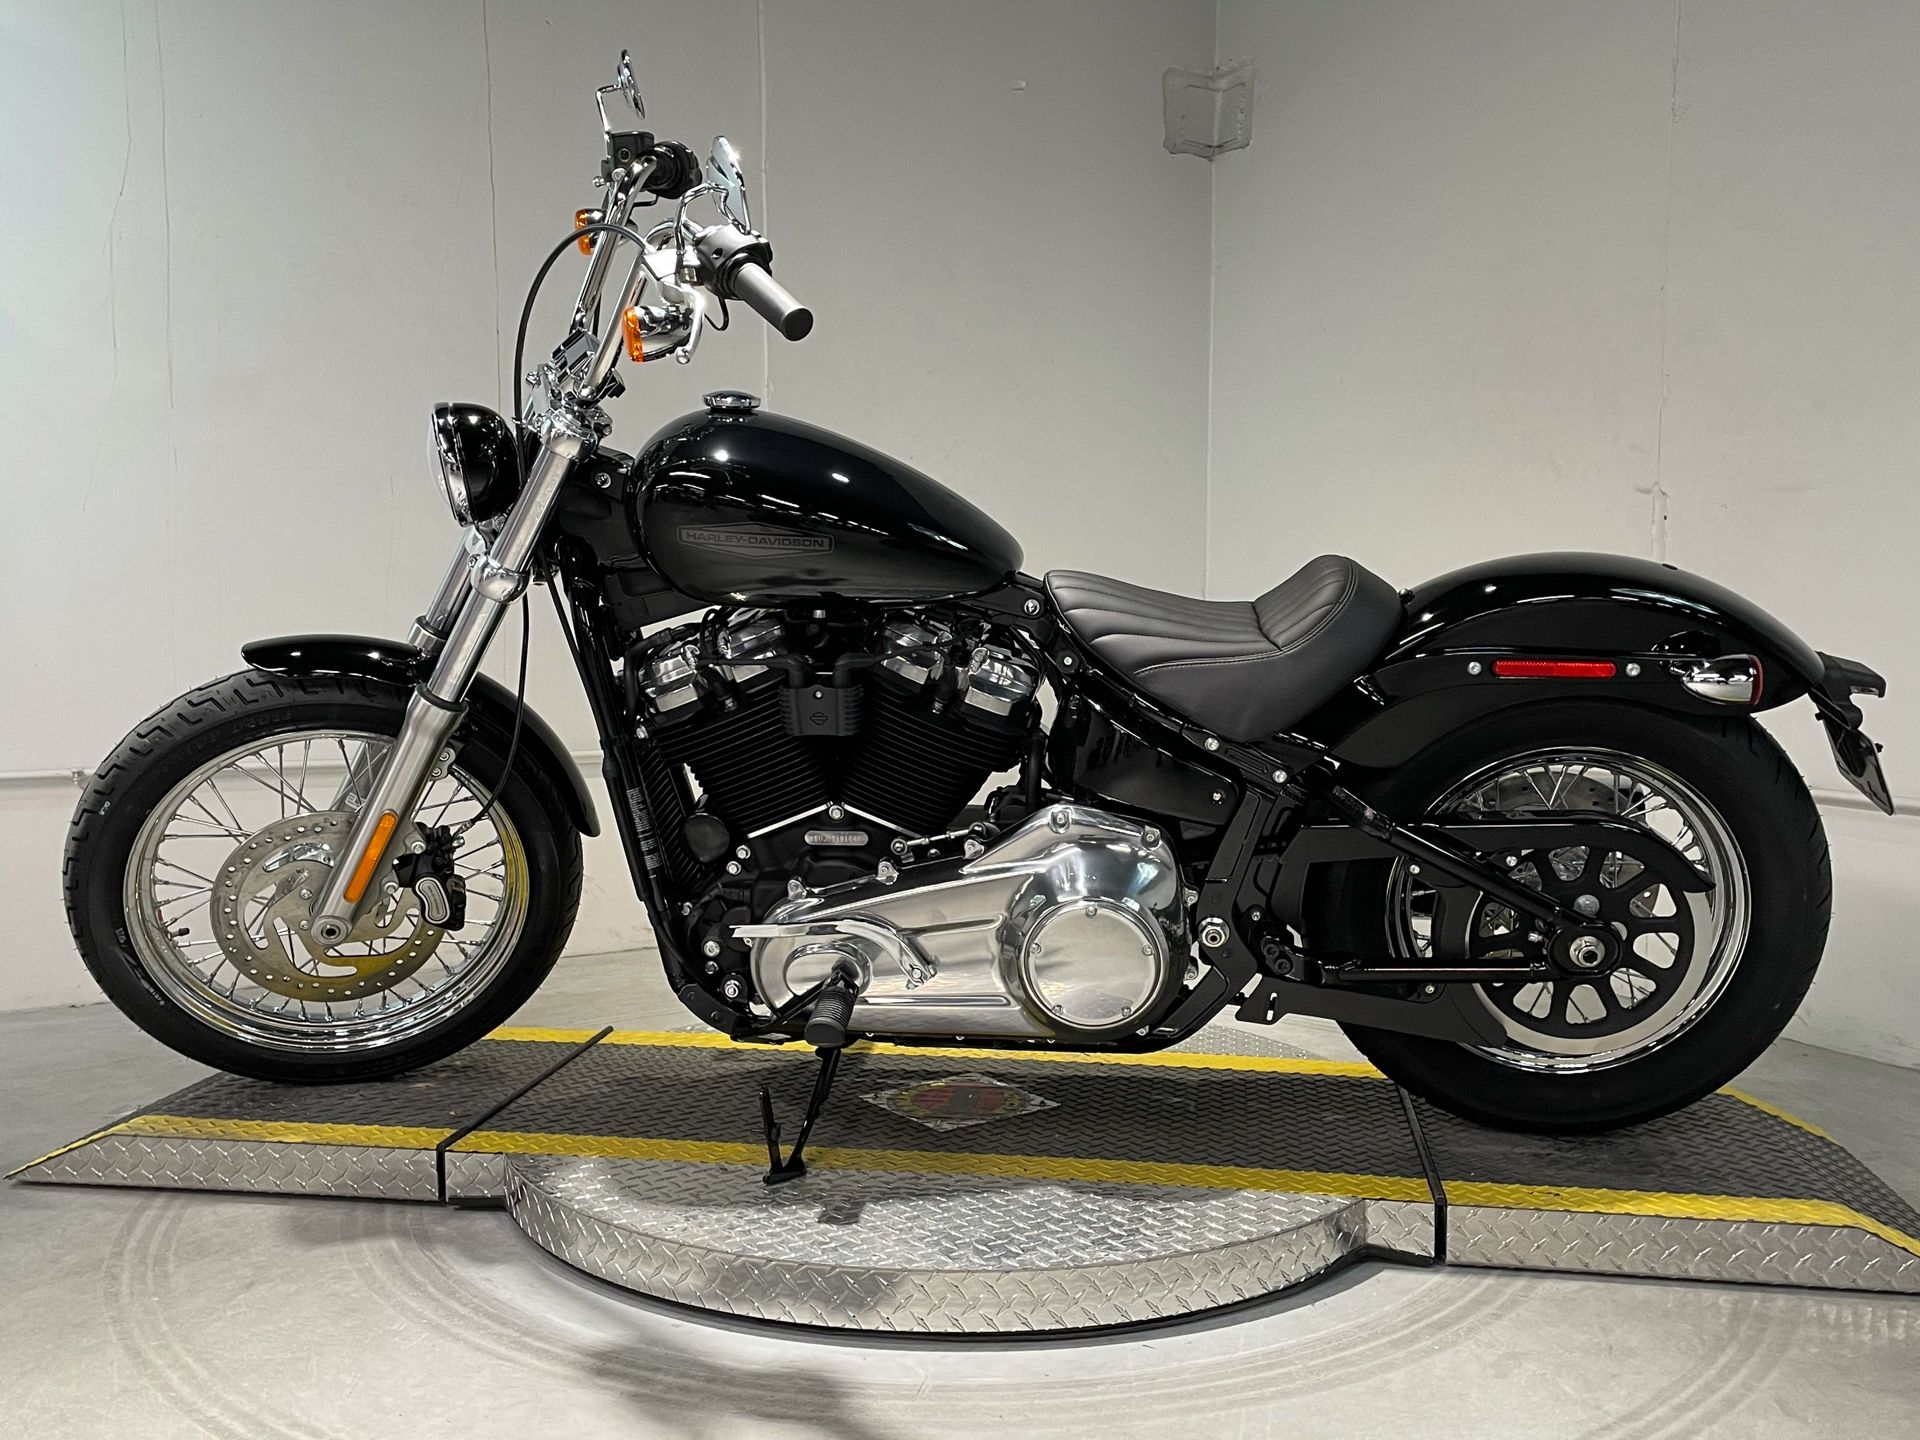 Black 2021 Harley-Davidson Softail Standard in showroom; side view